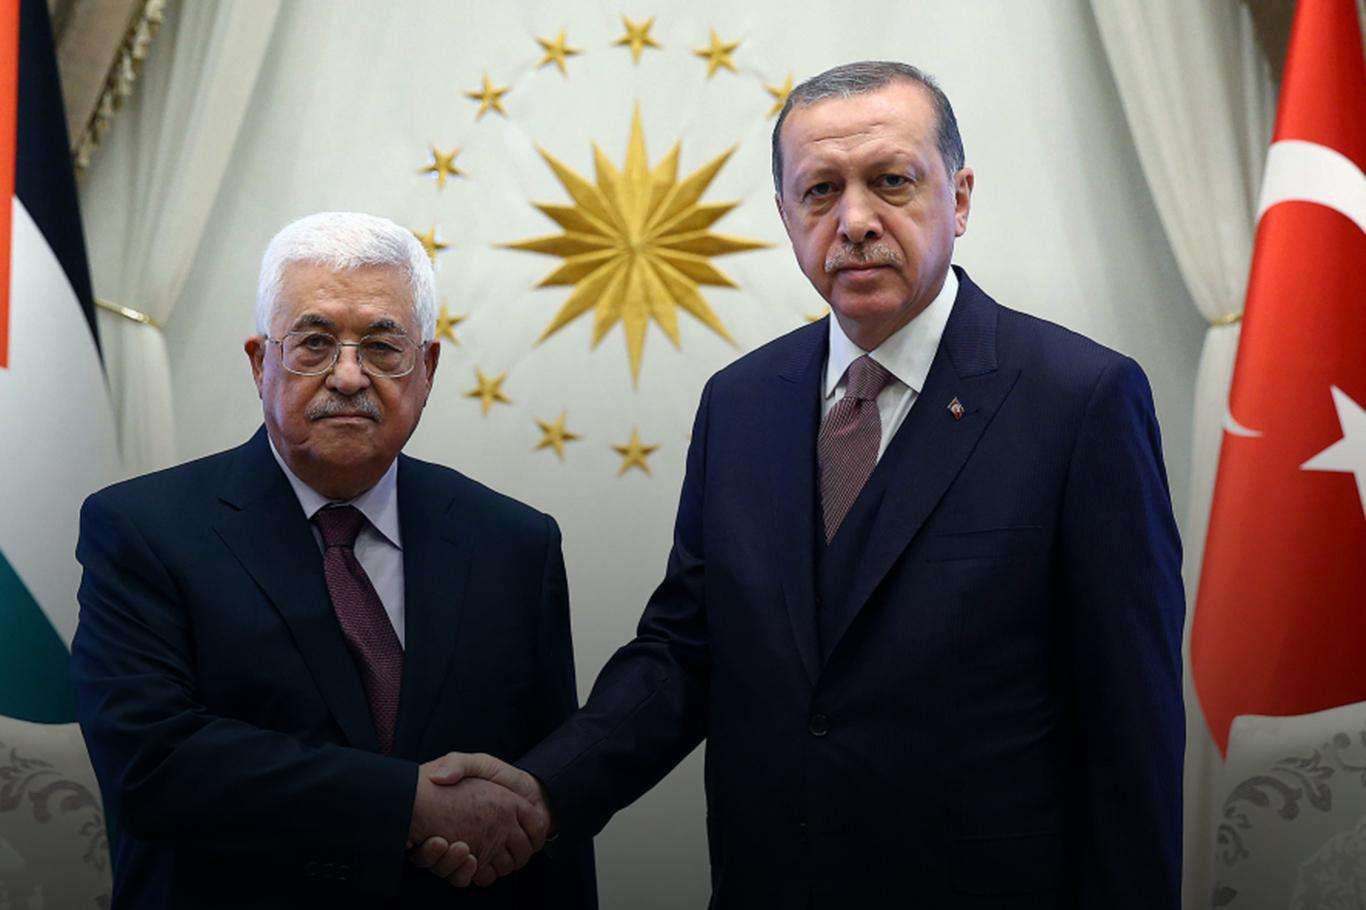 Al Fatah’s leader Abbas to visit Turkey